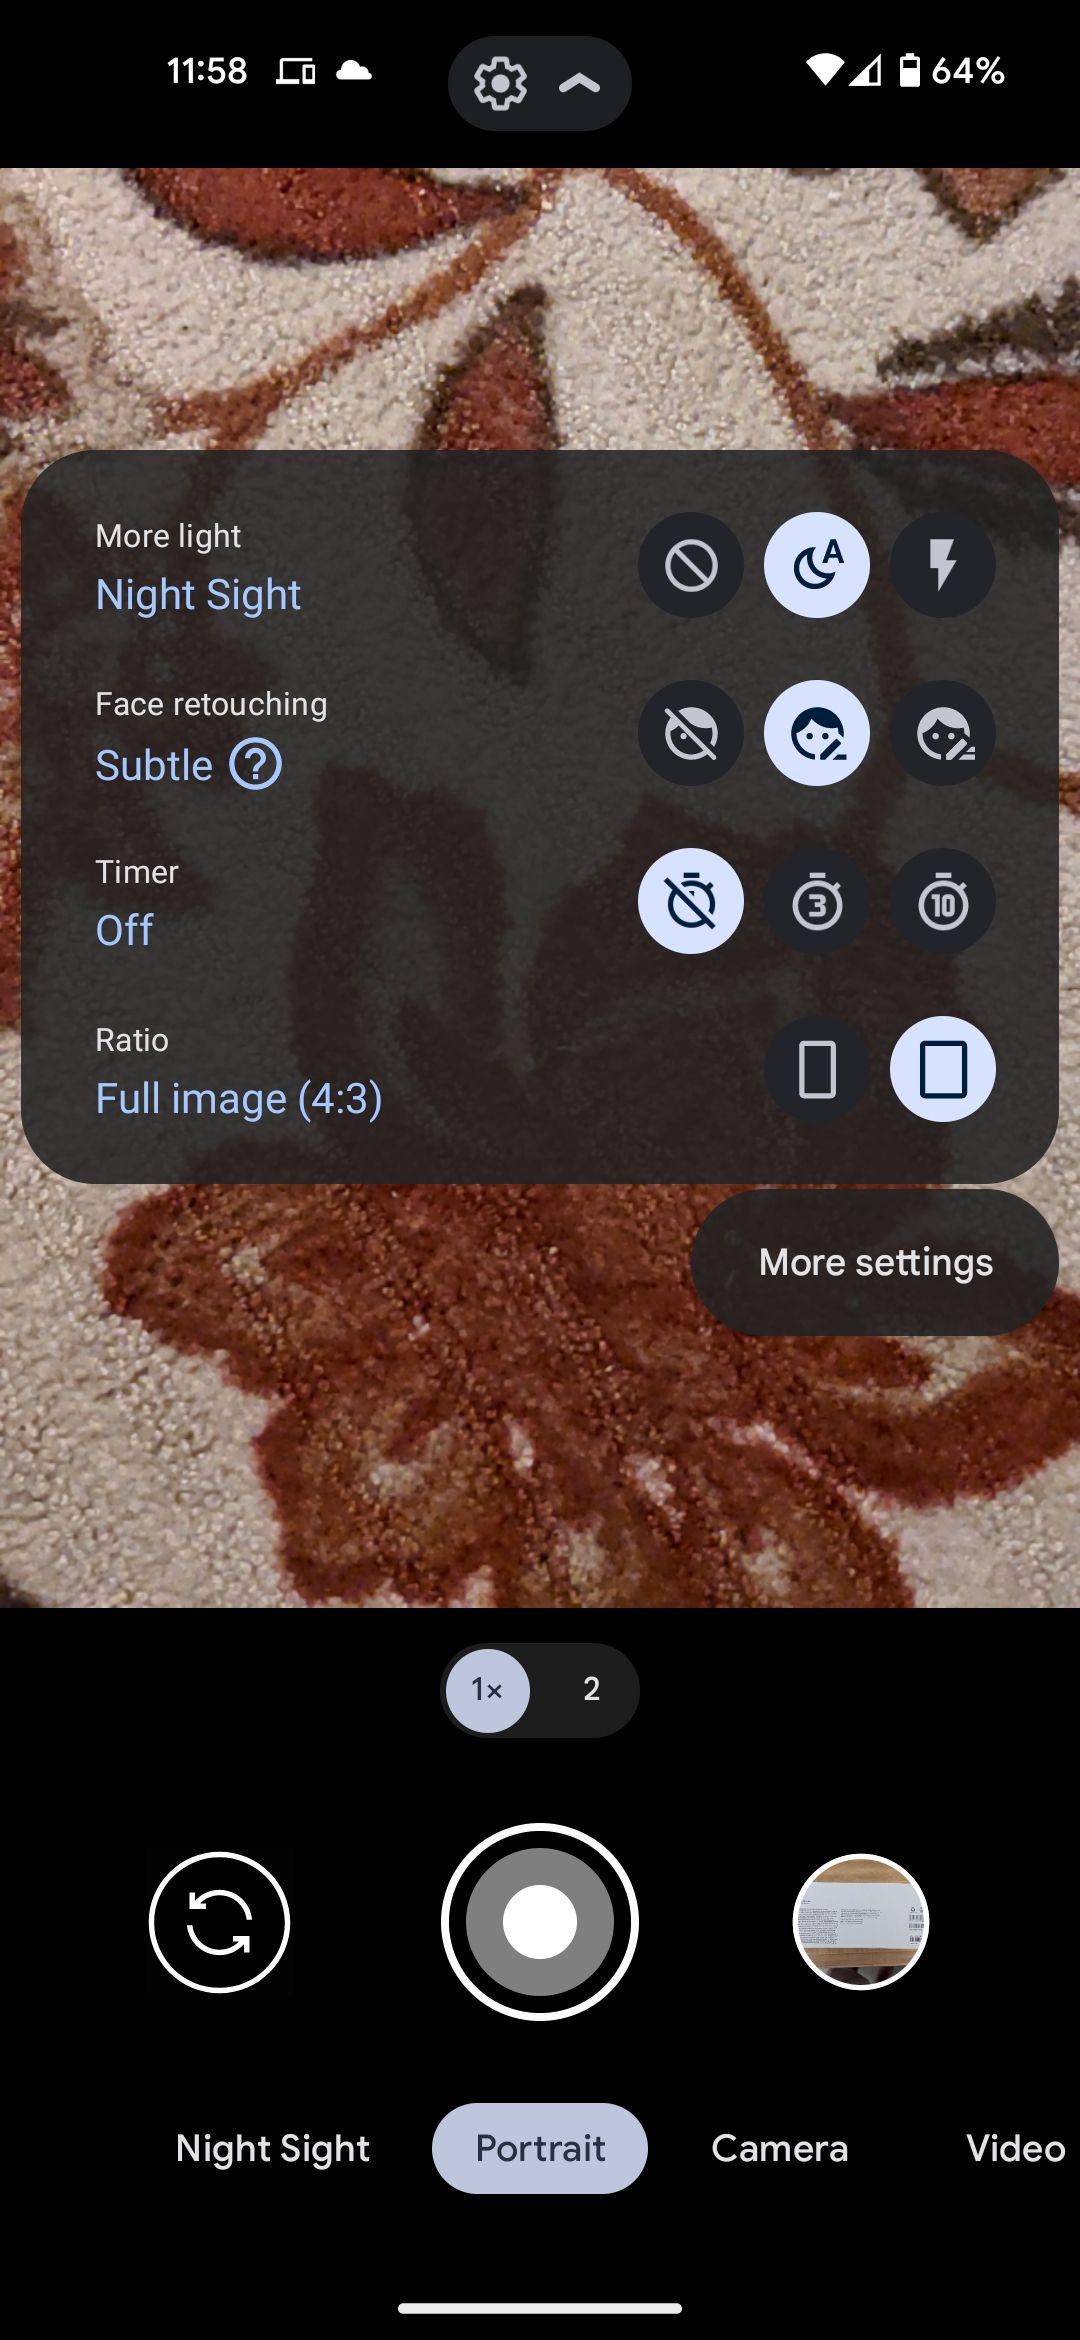 The Google camera app's portrait mode settings menu.